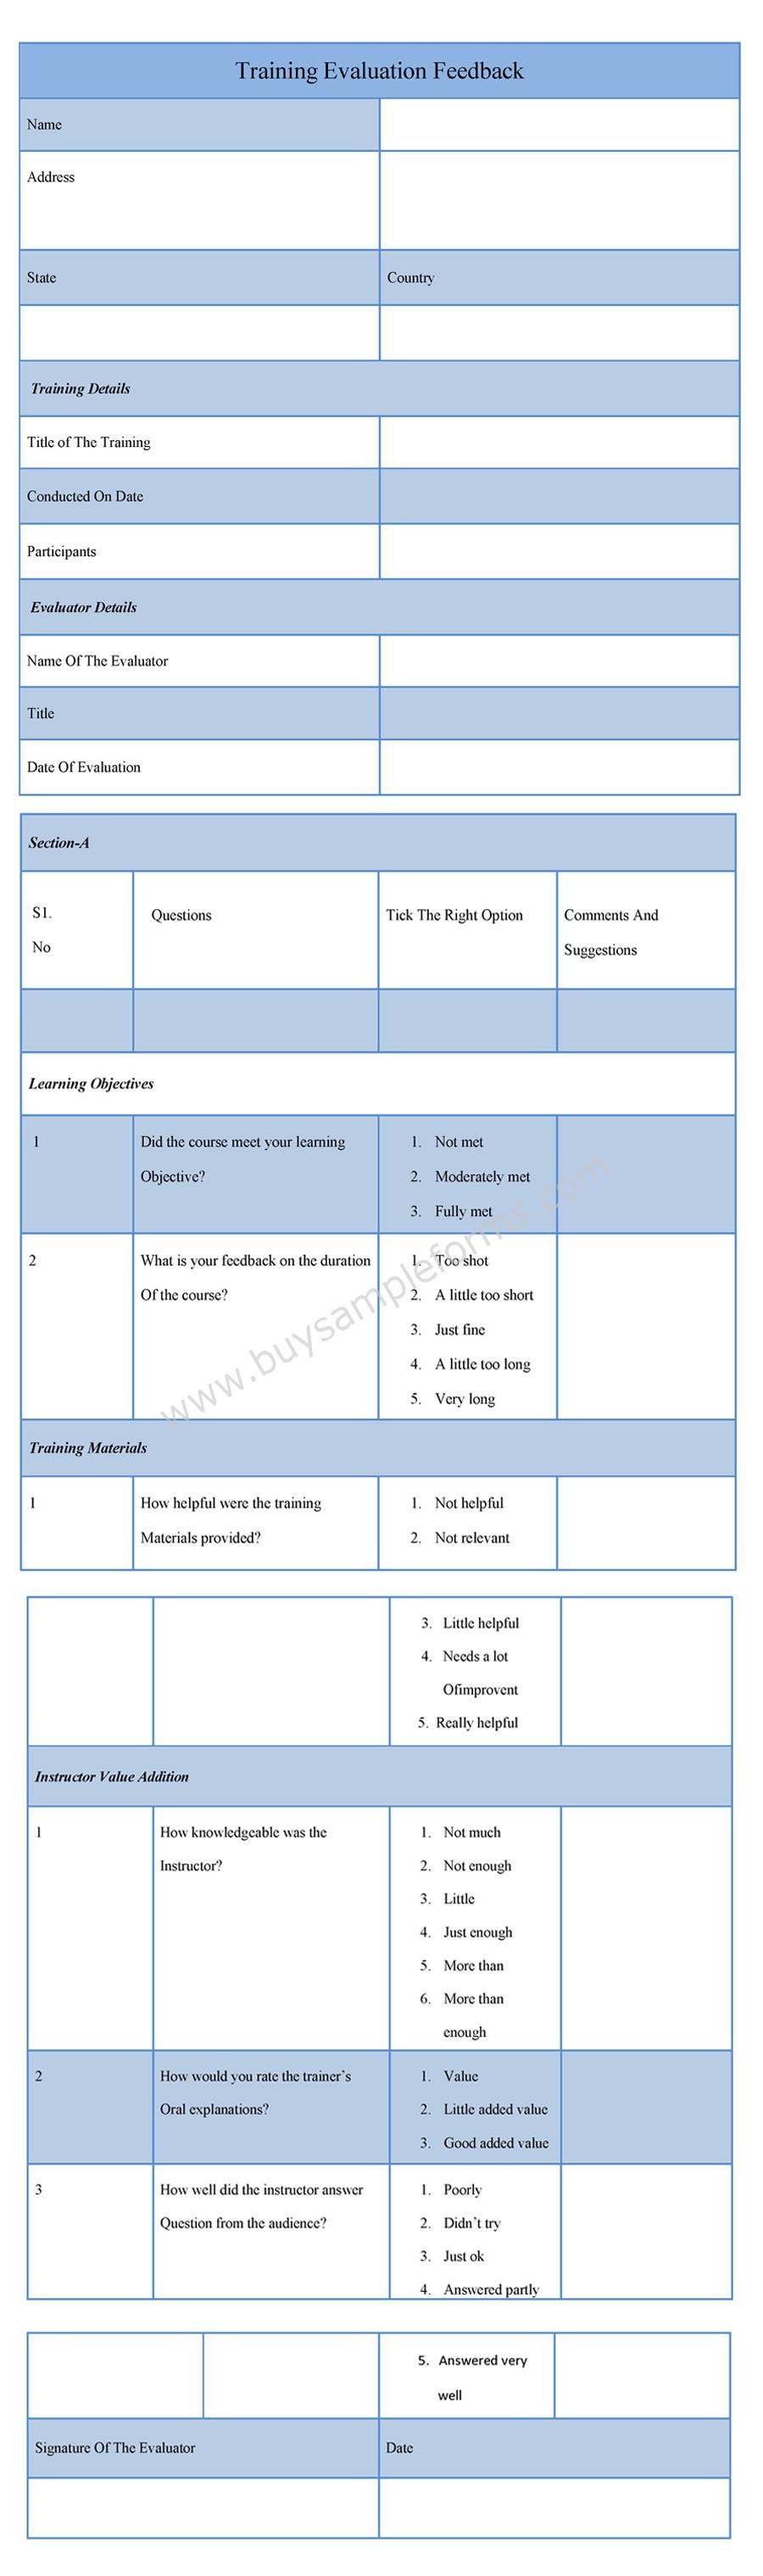 training evaluation feedback form template